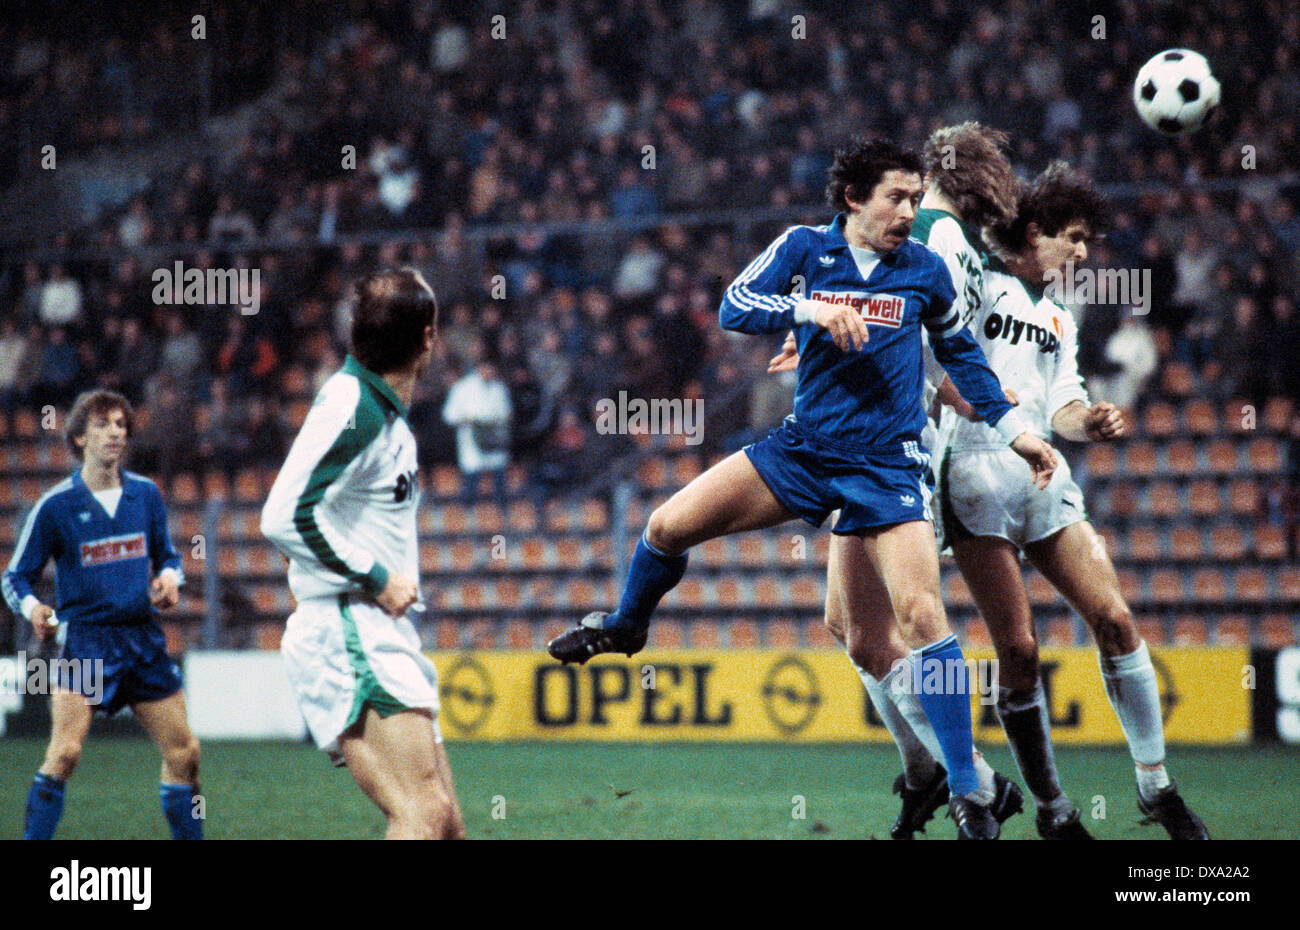 Calcio, Bundesliga, 1982/83, Ruhr Stadio, VfL Bochum contro SV Werder Bremen 1:2, scena del match, antenna duello con Dieter liberiane (VFL) 3.F.R. e Michael Boehnke (Werder) destro Foto Stock